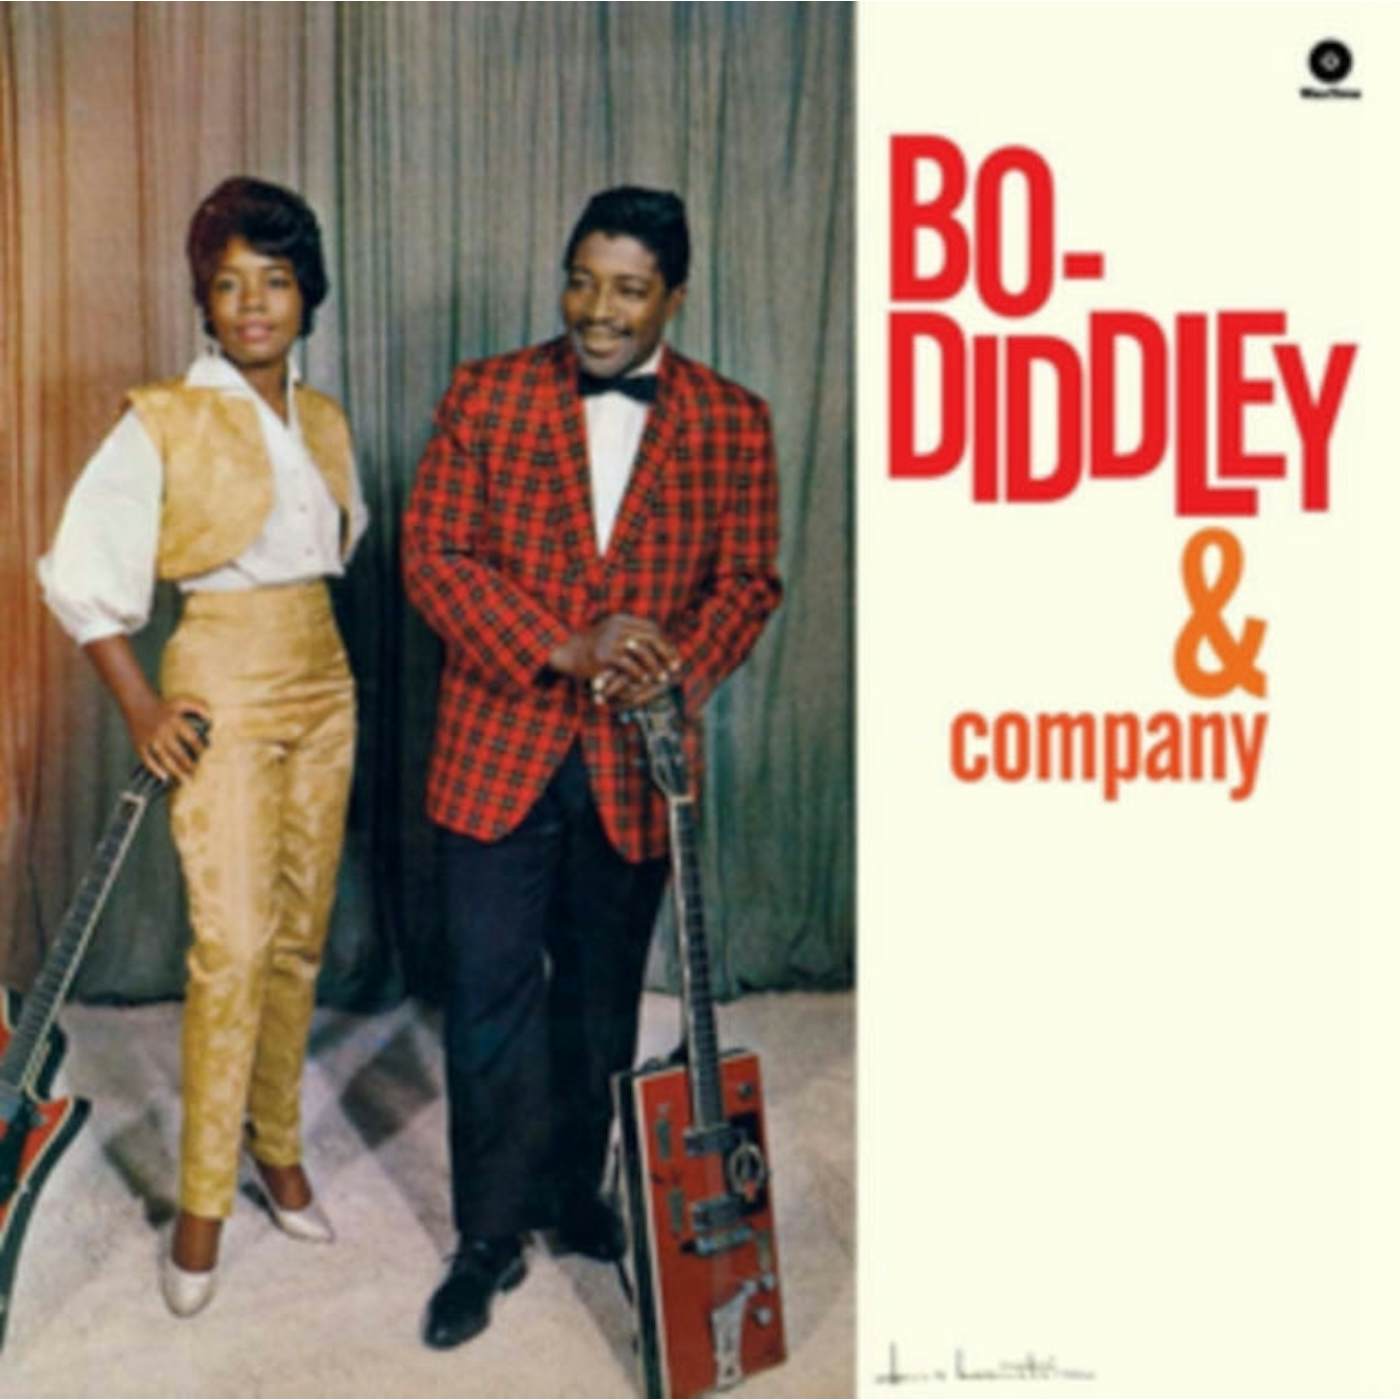 Bo Diddley LP Vinyl Record - & Company